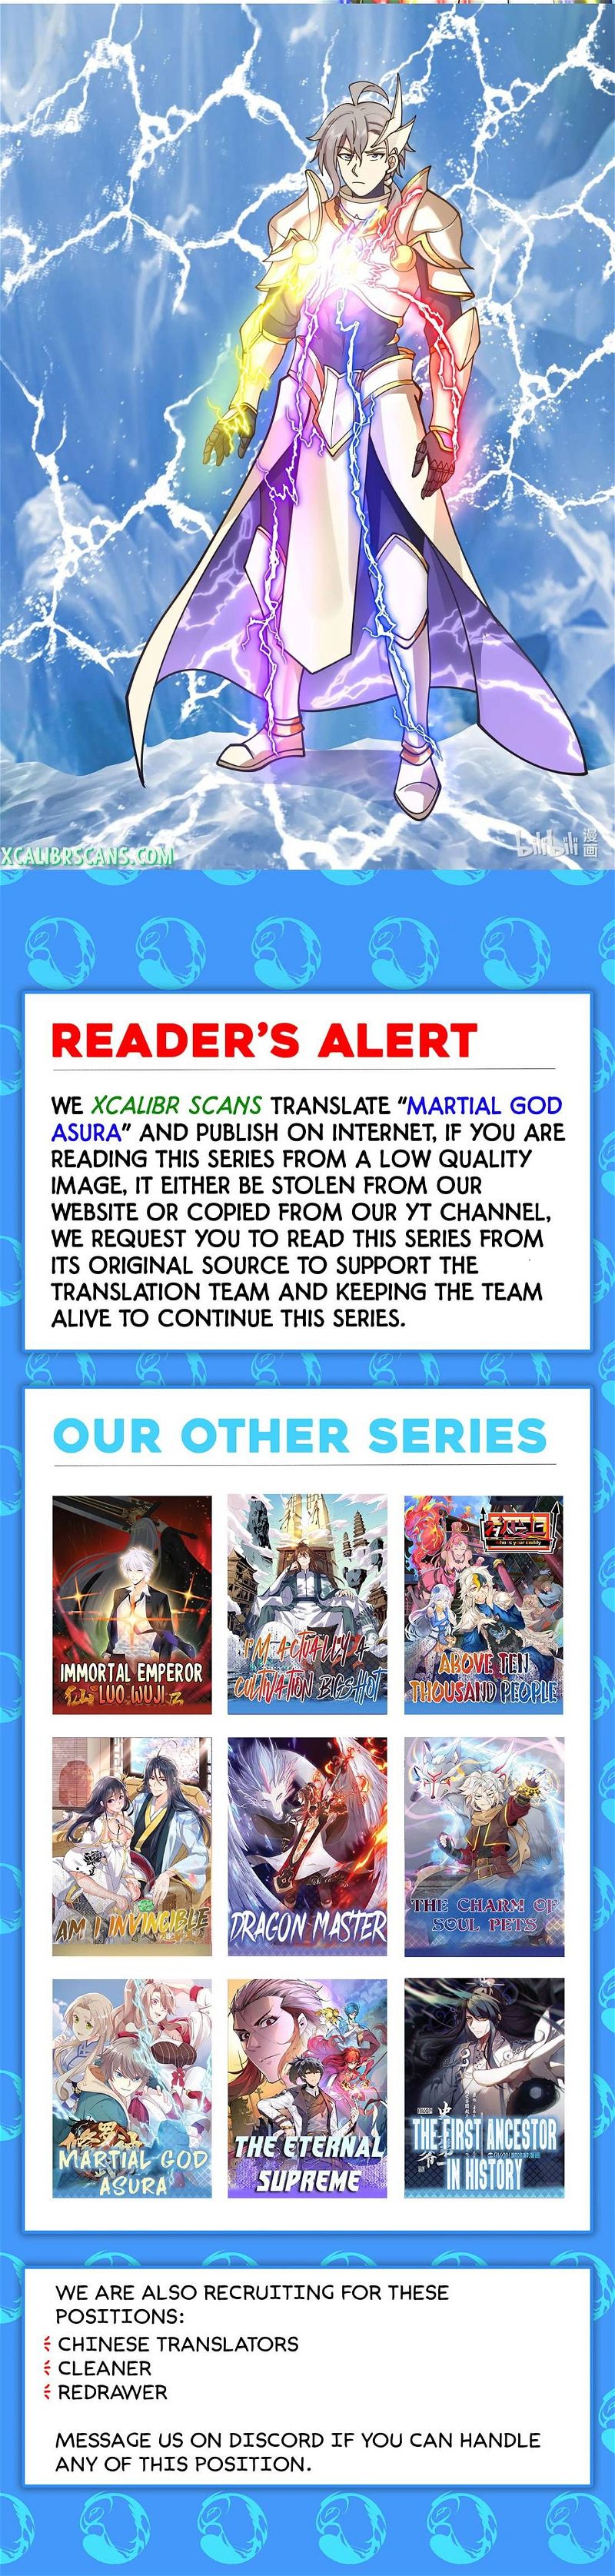 Martial God Asura Chapter 559 page 10